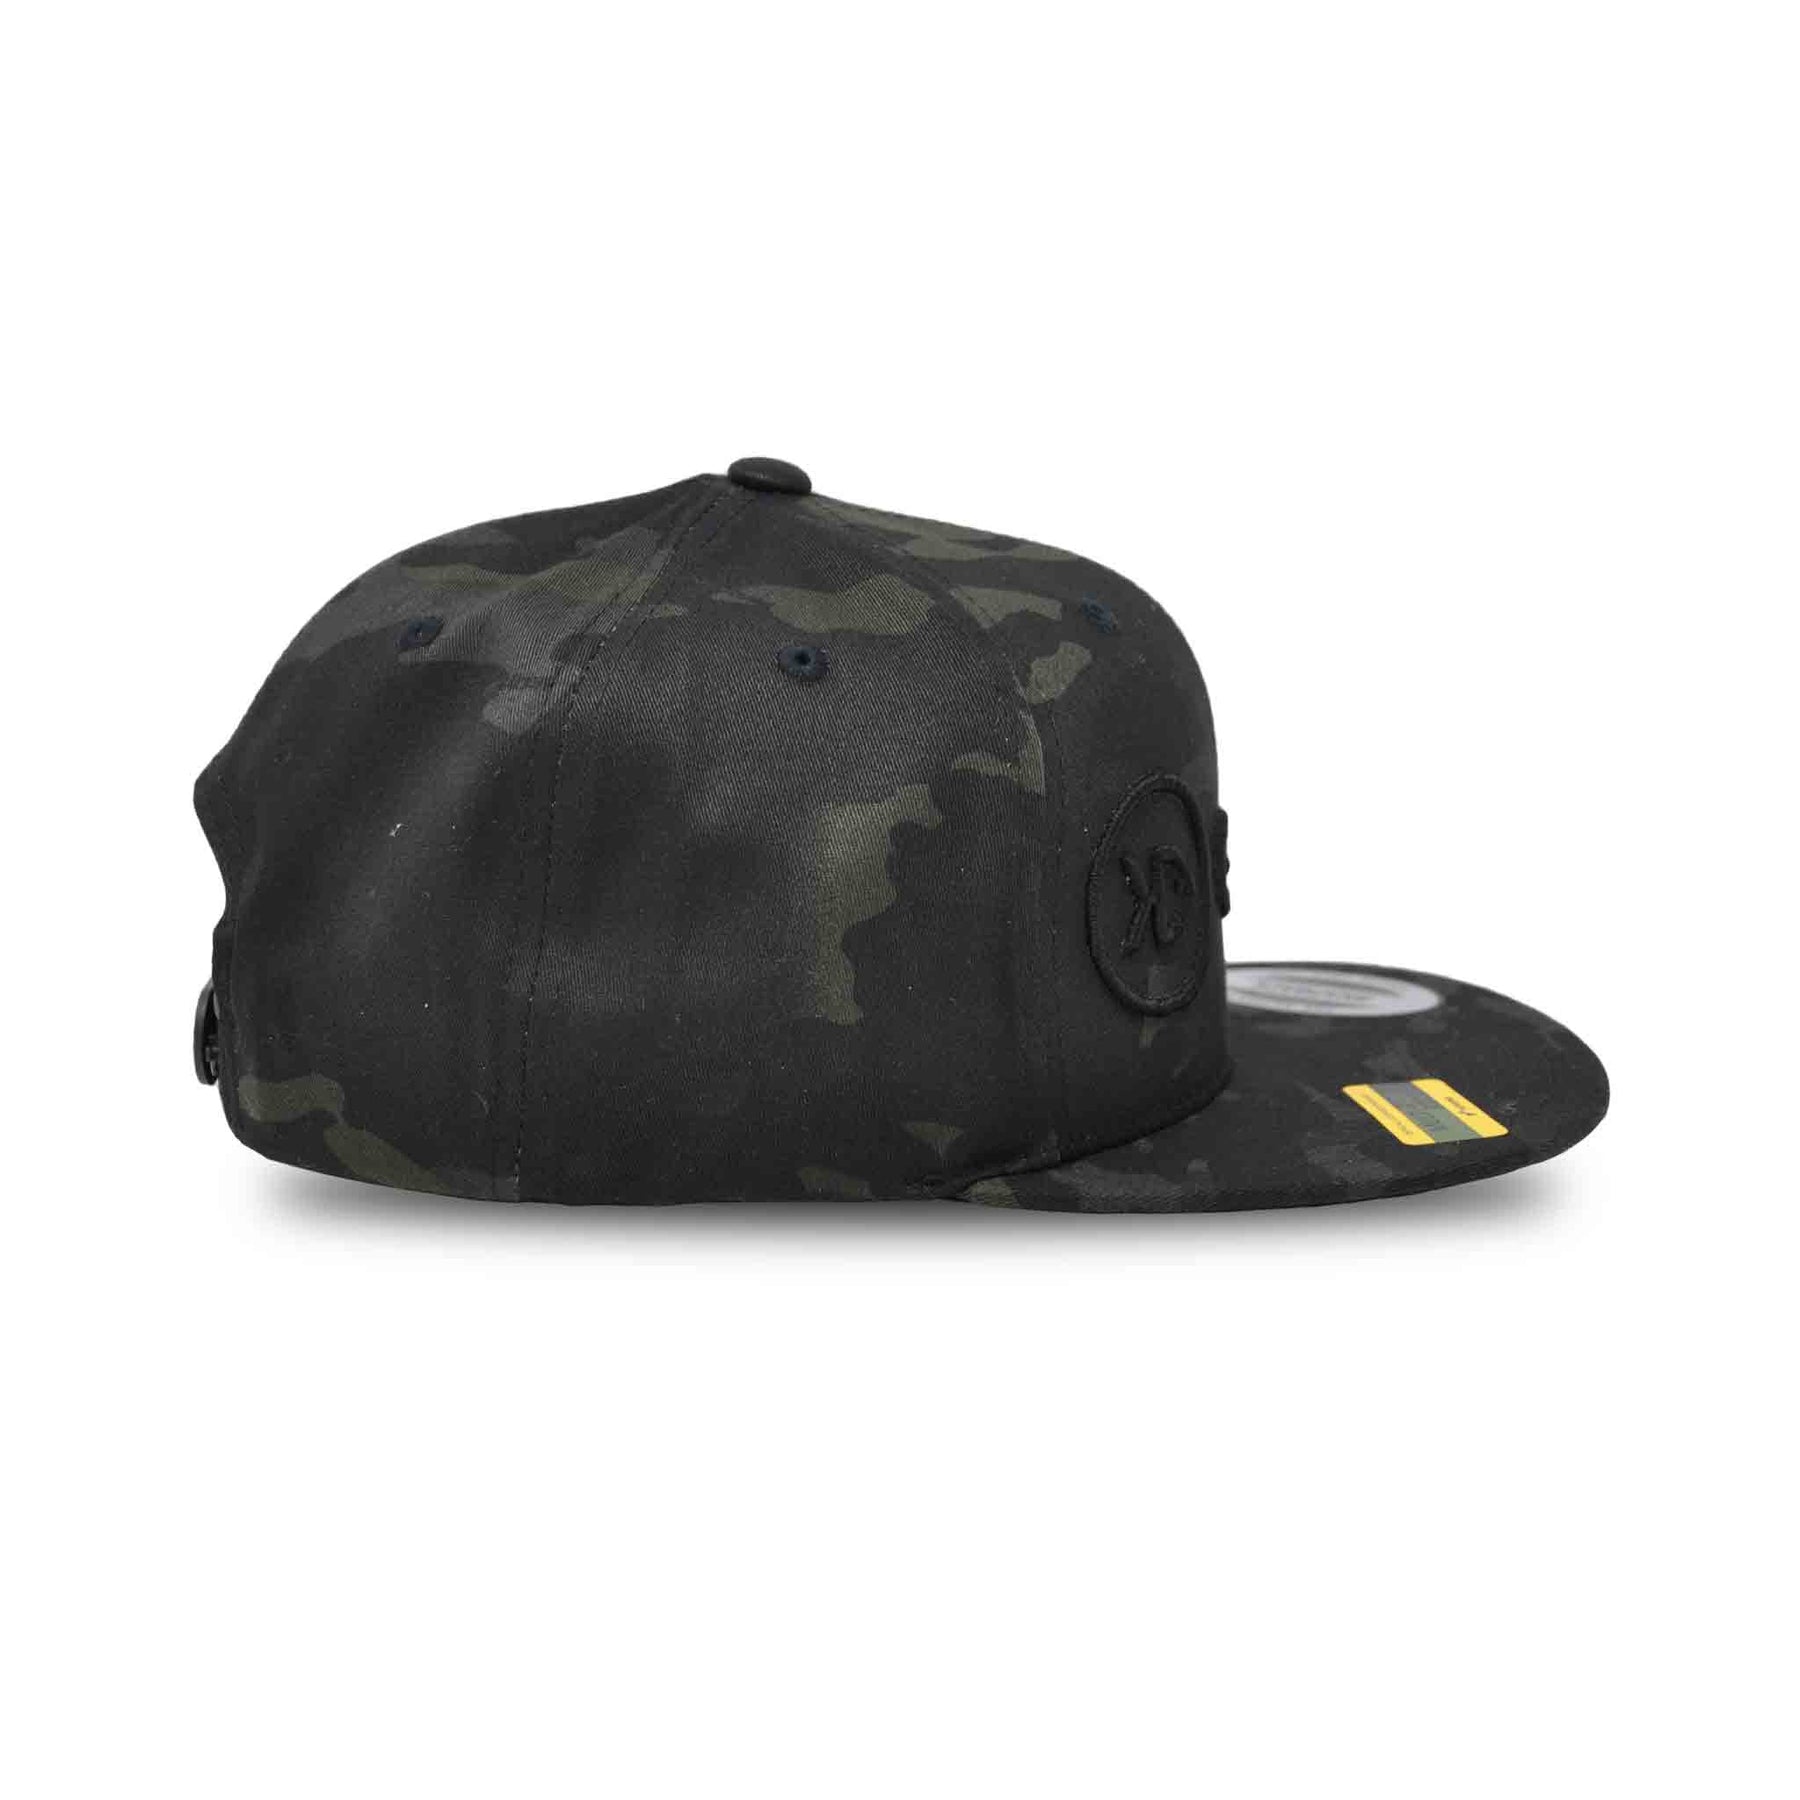 Ezoko Classics YUPOONG Flat Brim Cap | fishing hat MultiCam Black / Black